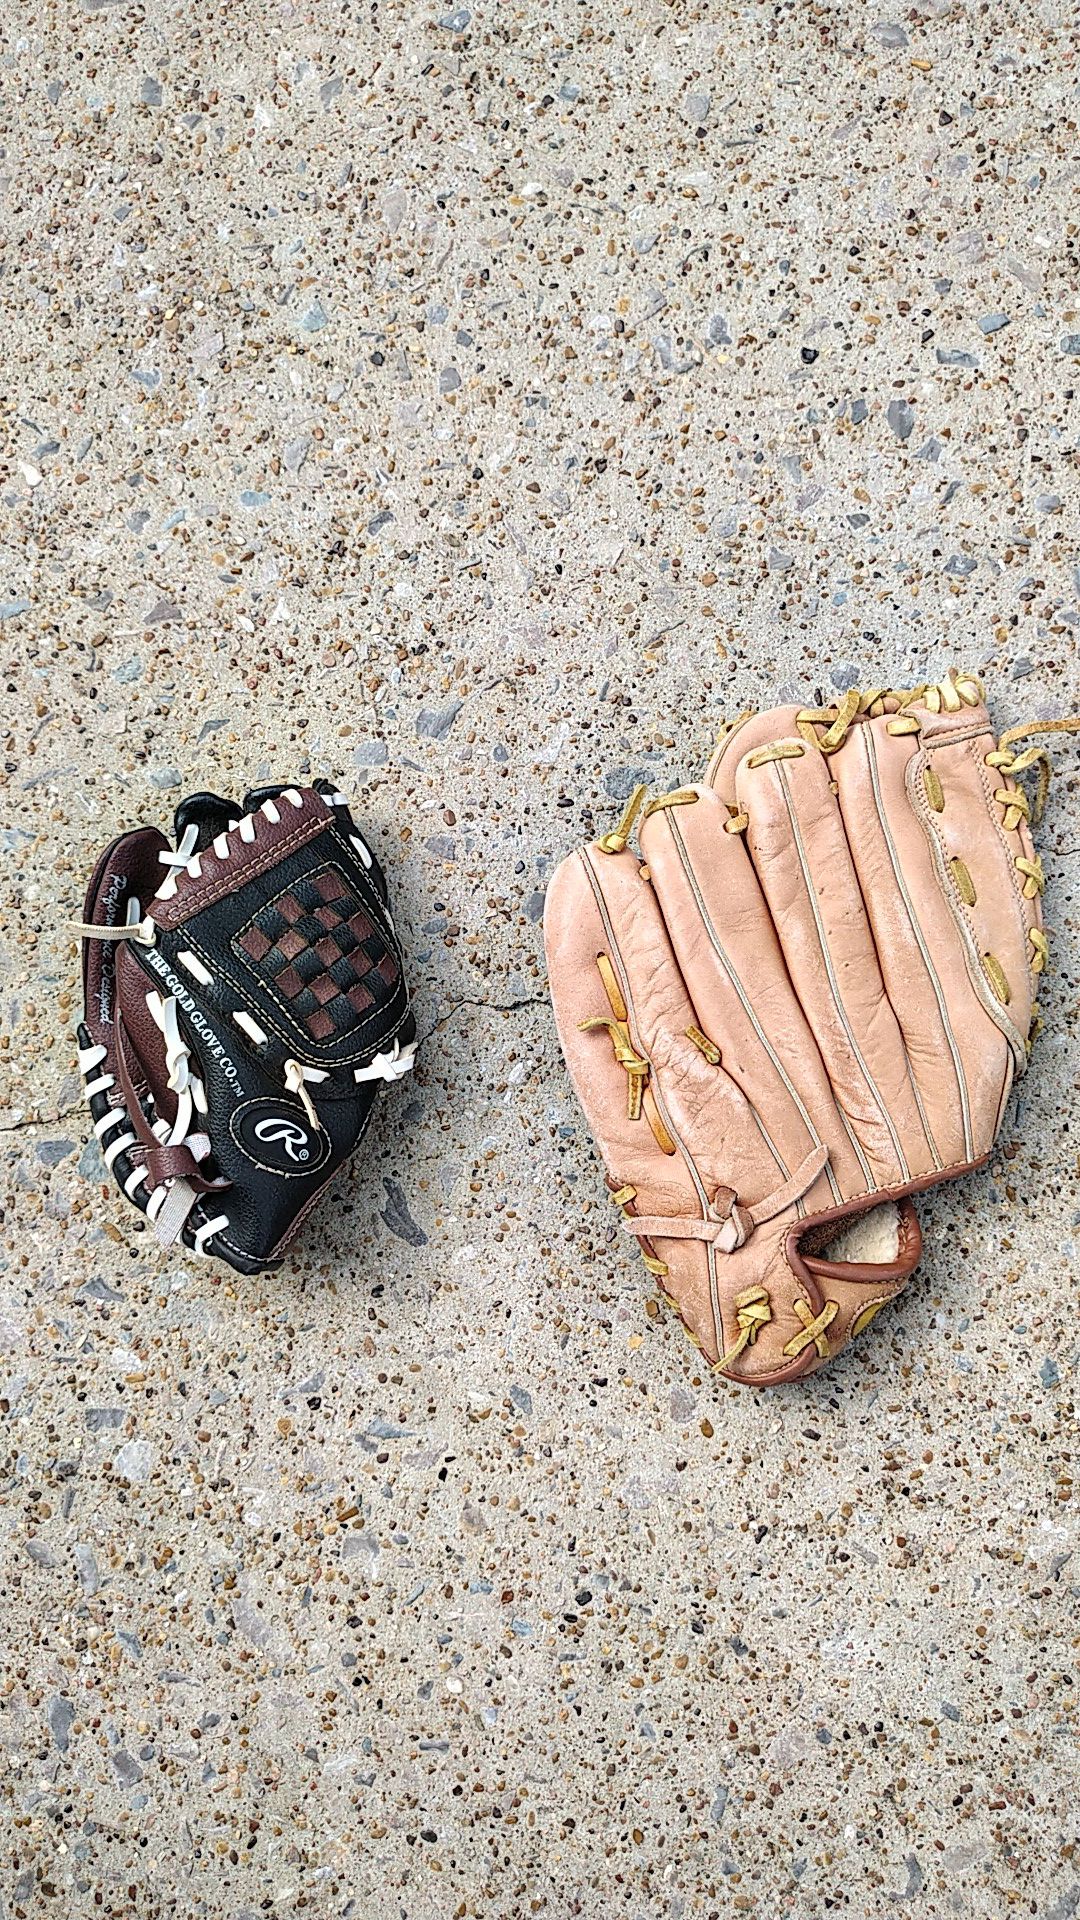 Baseball gloves - Rawlings - Mizzuno - Adidas - Franklin